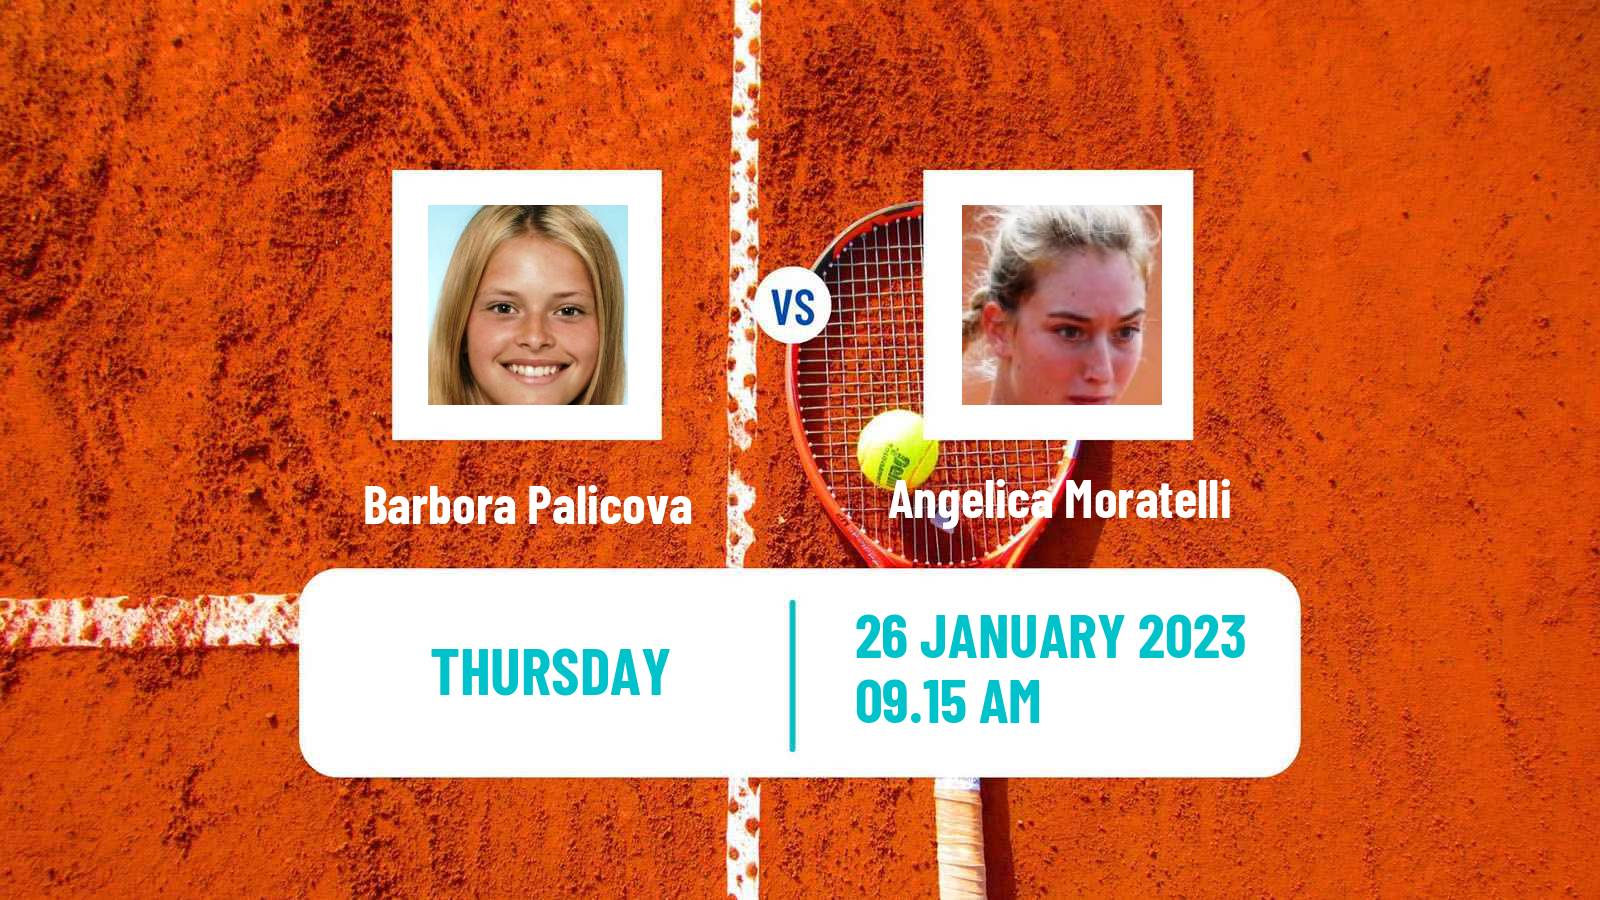 Tennis ITF Tournaments Barbora Palicova - Angelica Moratelli